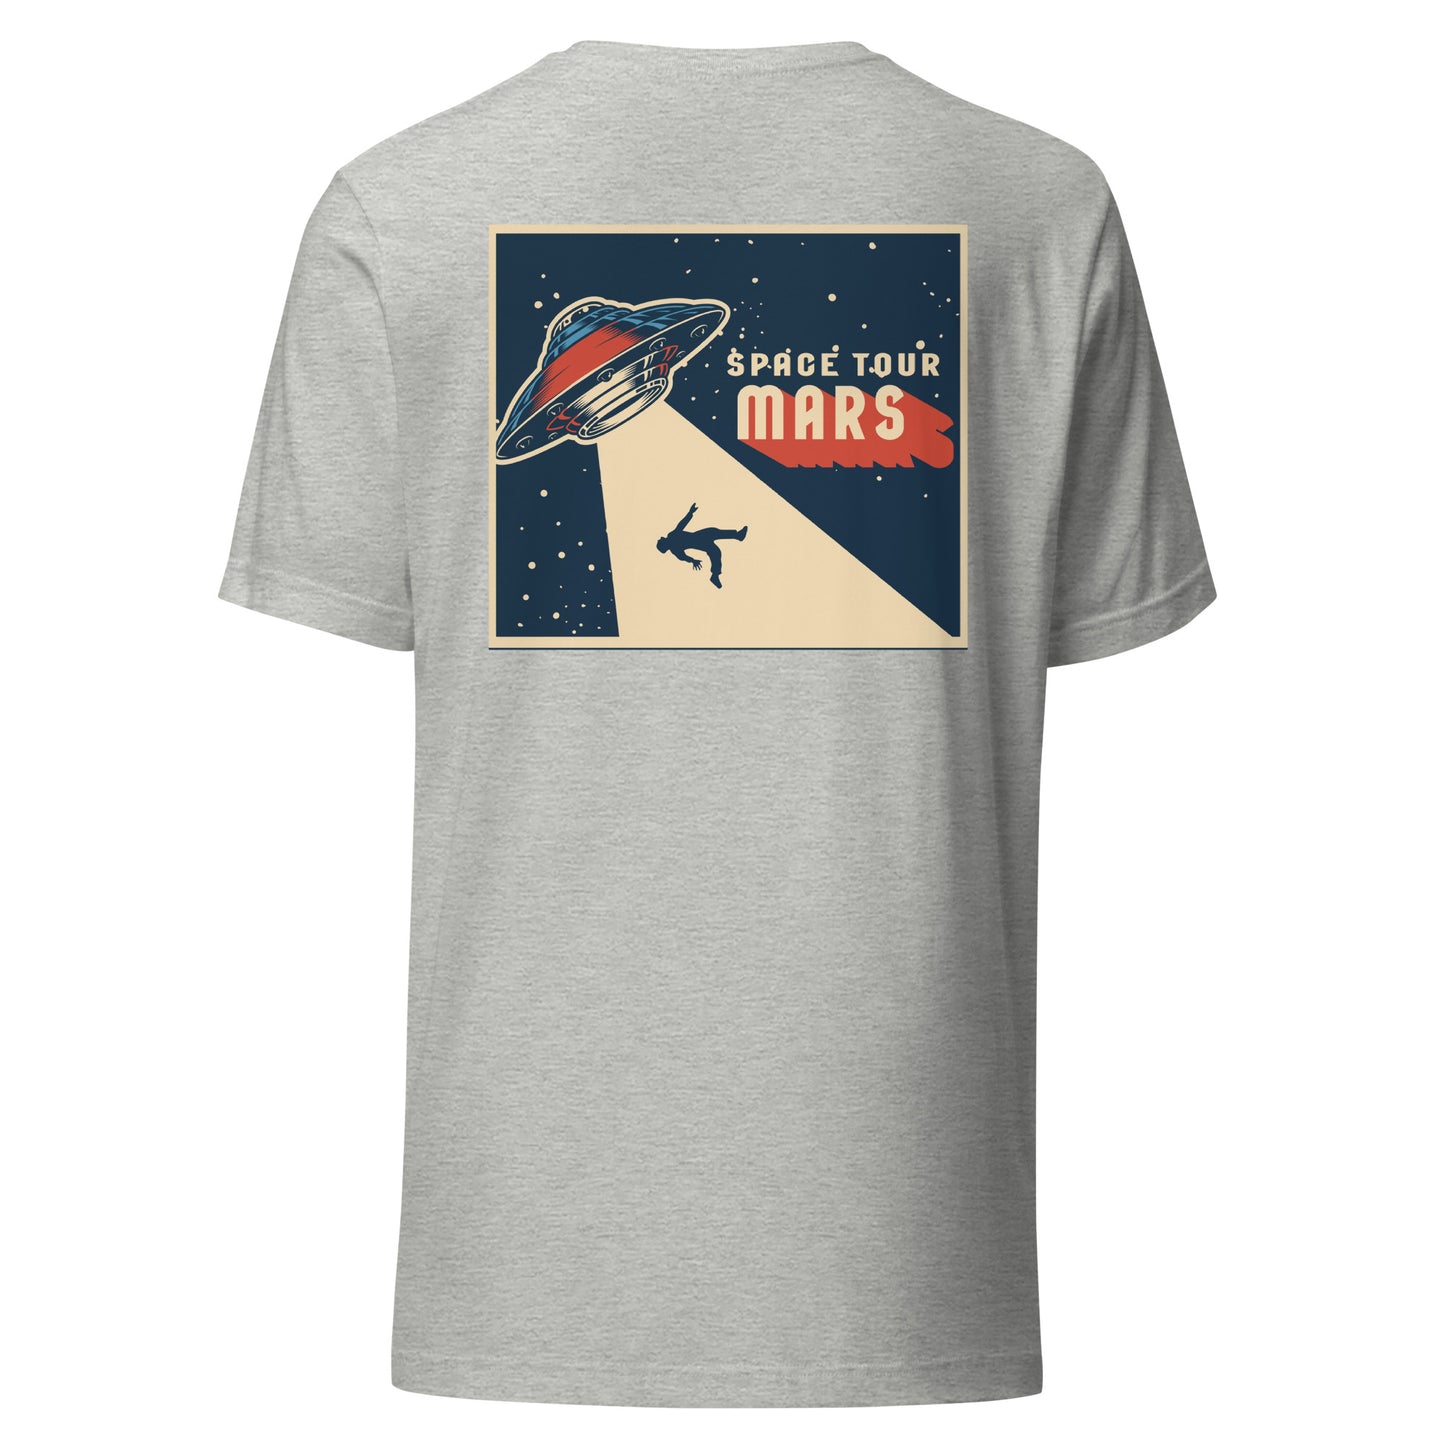 Space Tour Mars T-shirt